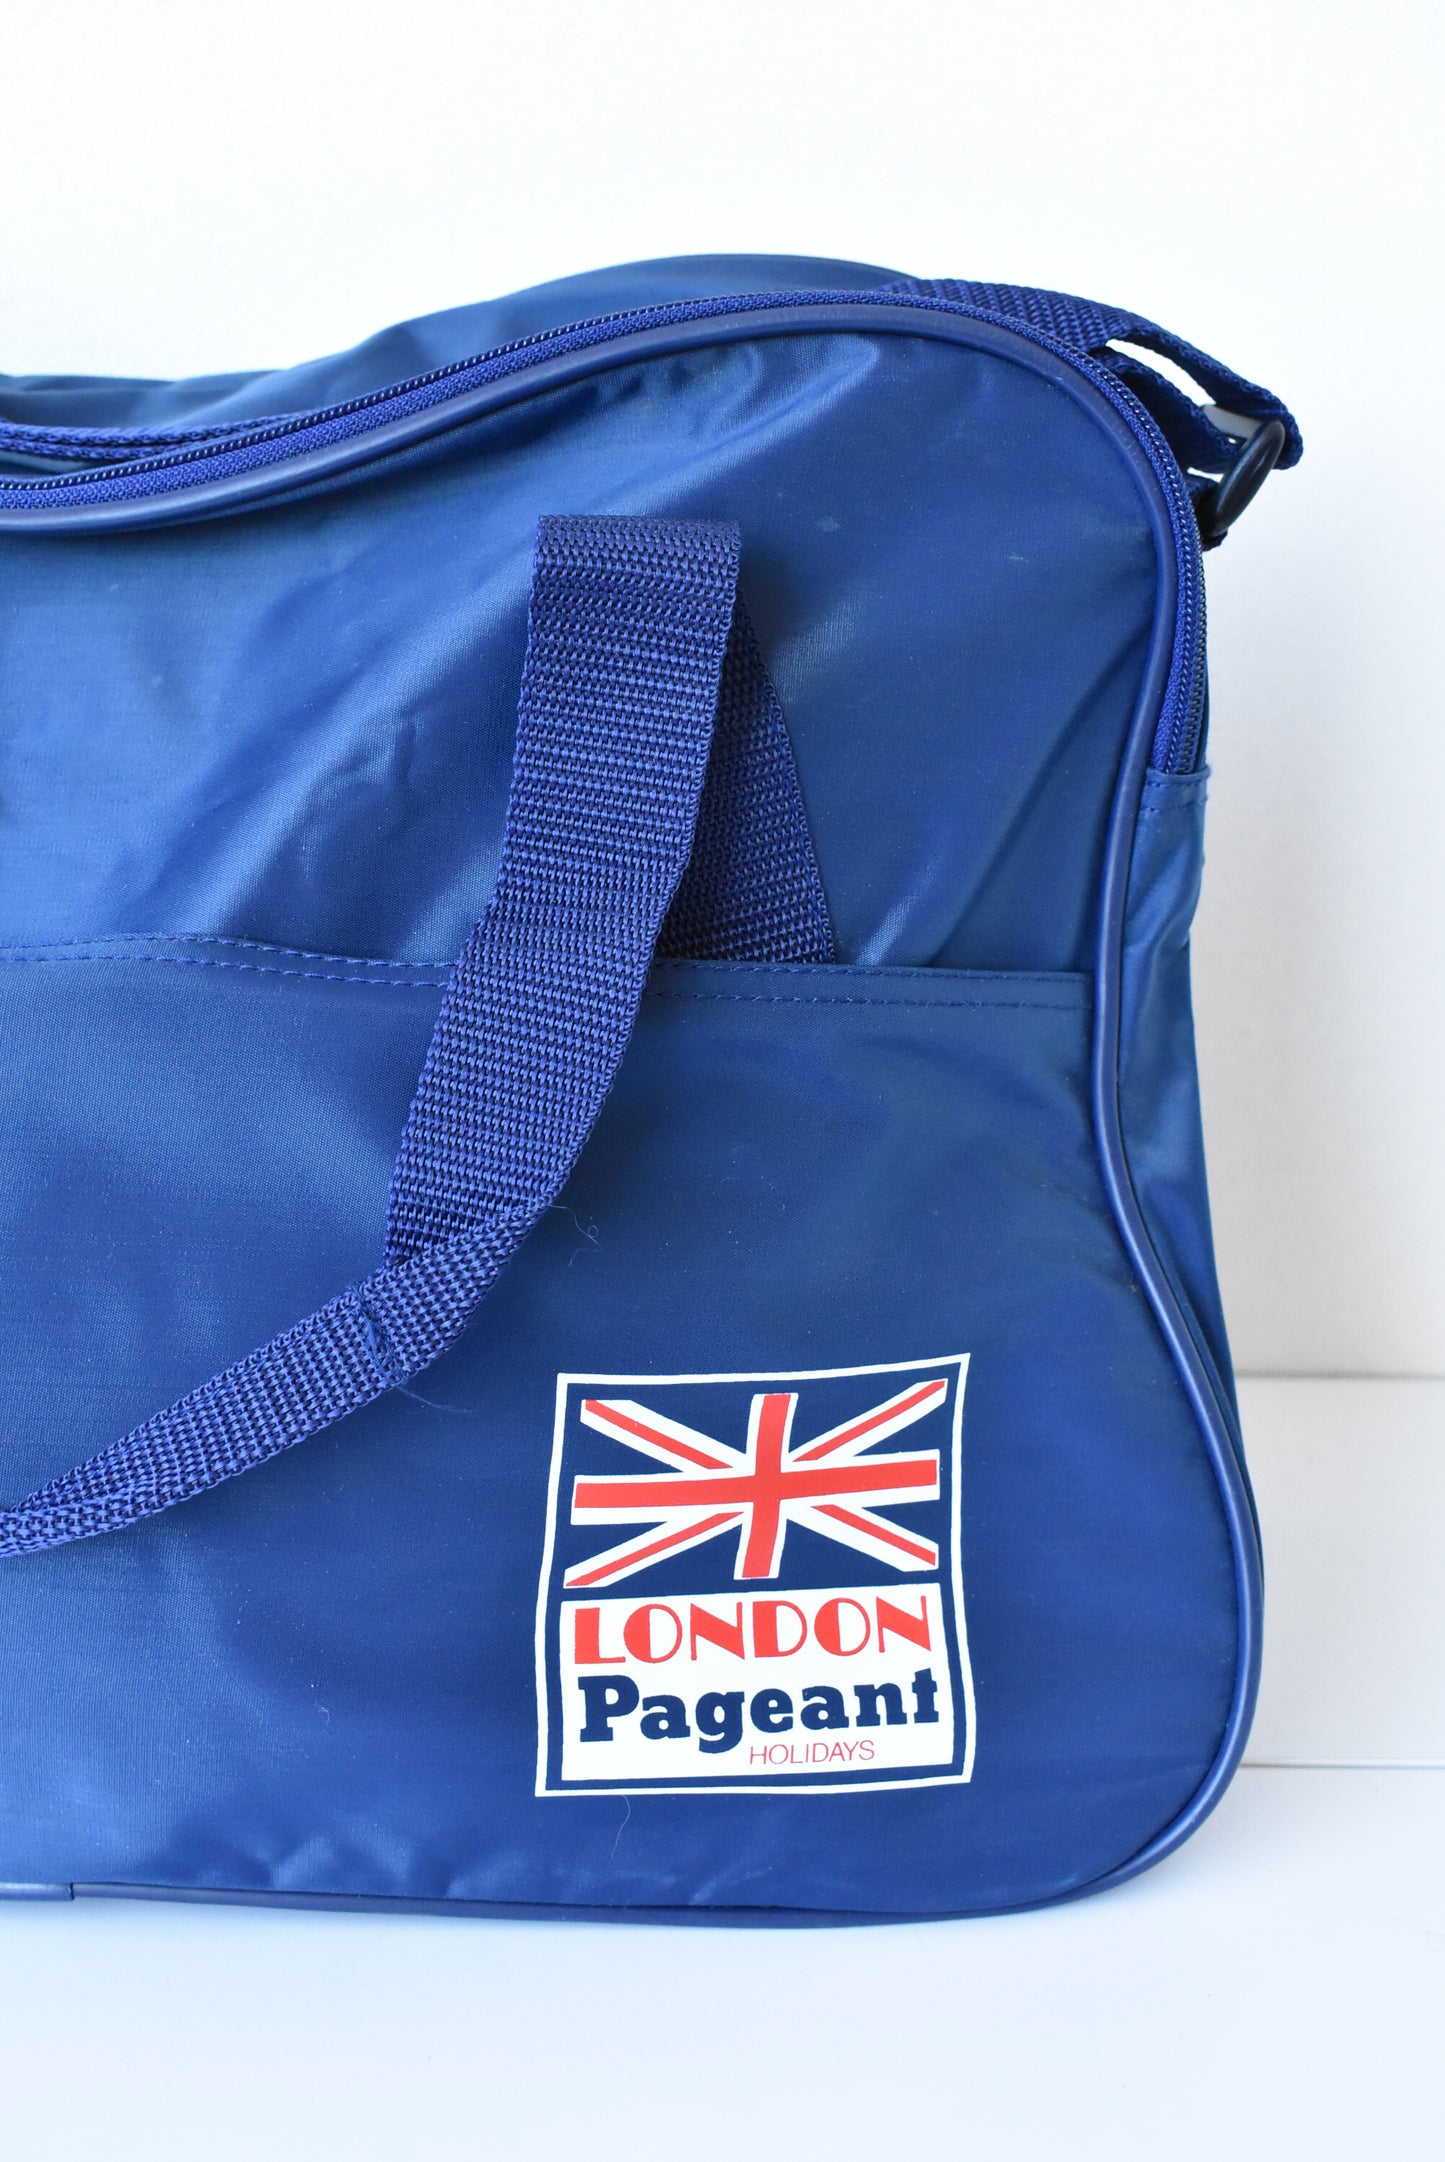 Retro travel bag London Pageant Holidays